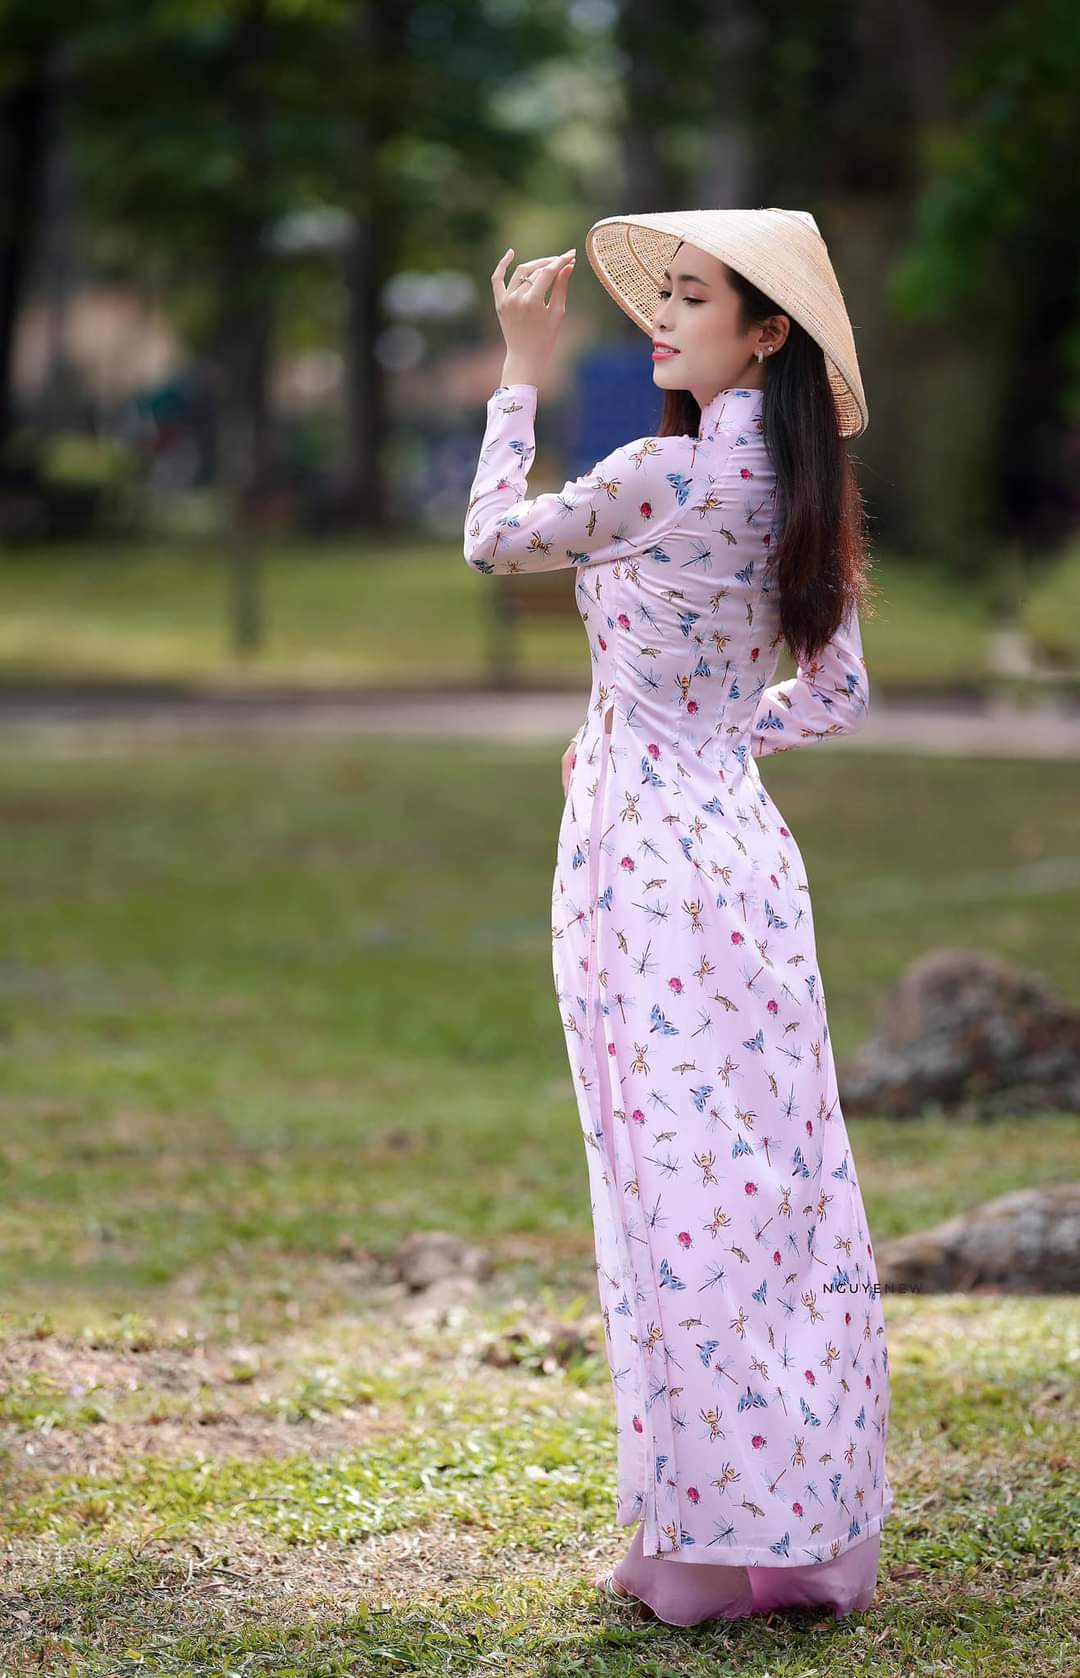 Vietnamese woman on the purple